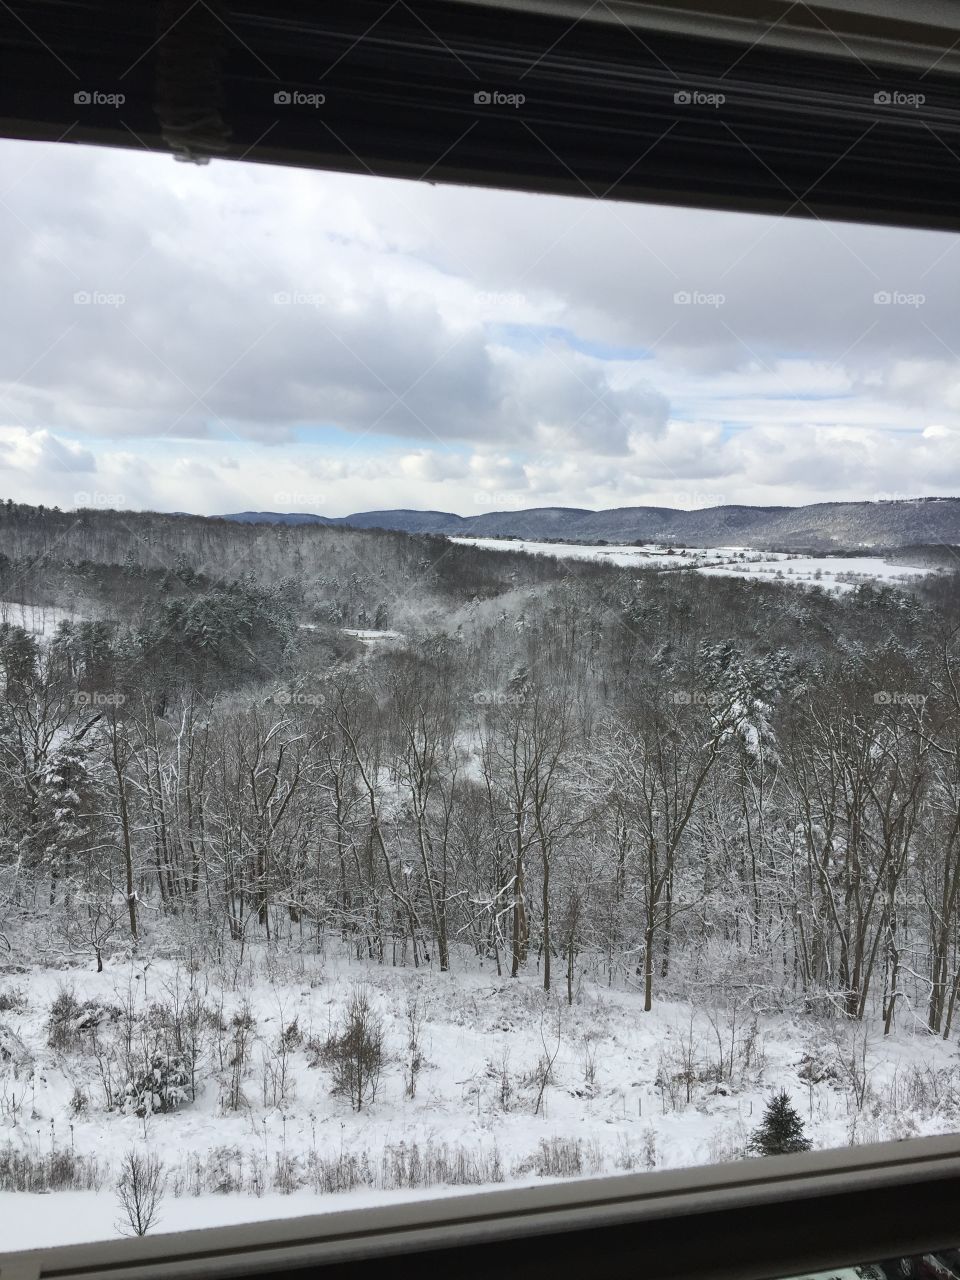 February in Pennsylvania